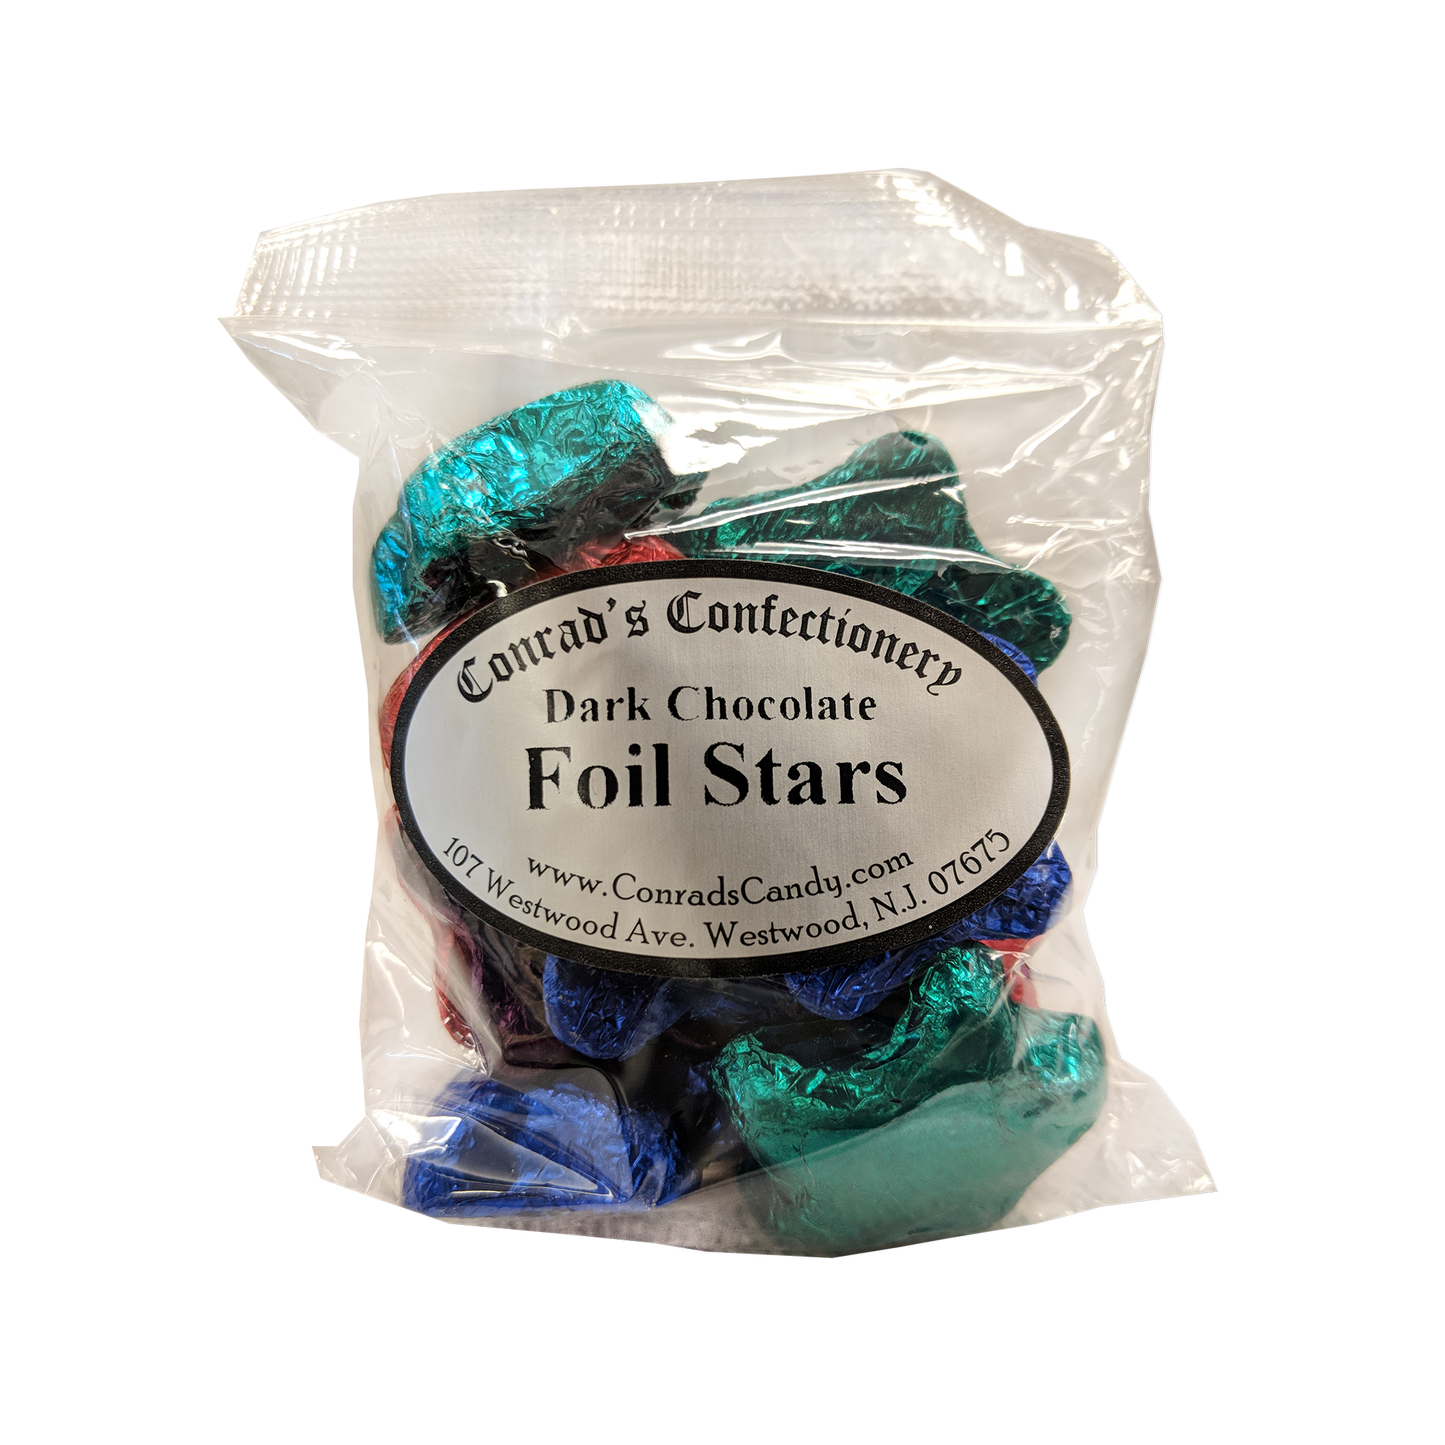 Dark Chocolate Foil Stars- 4 oz bag